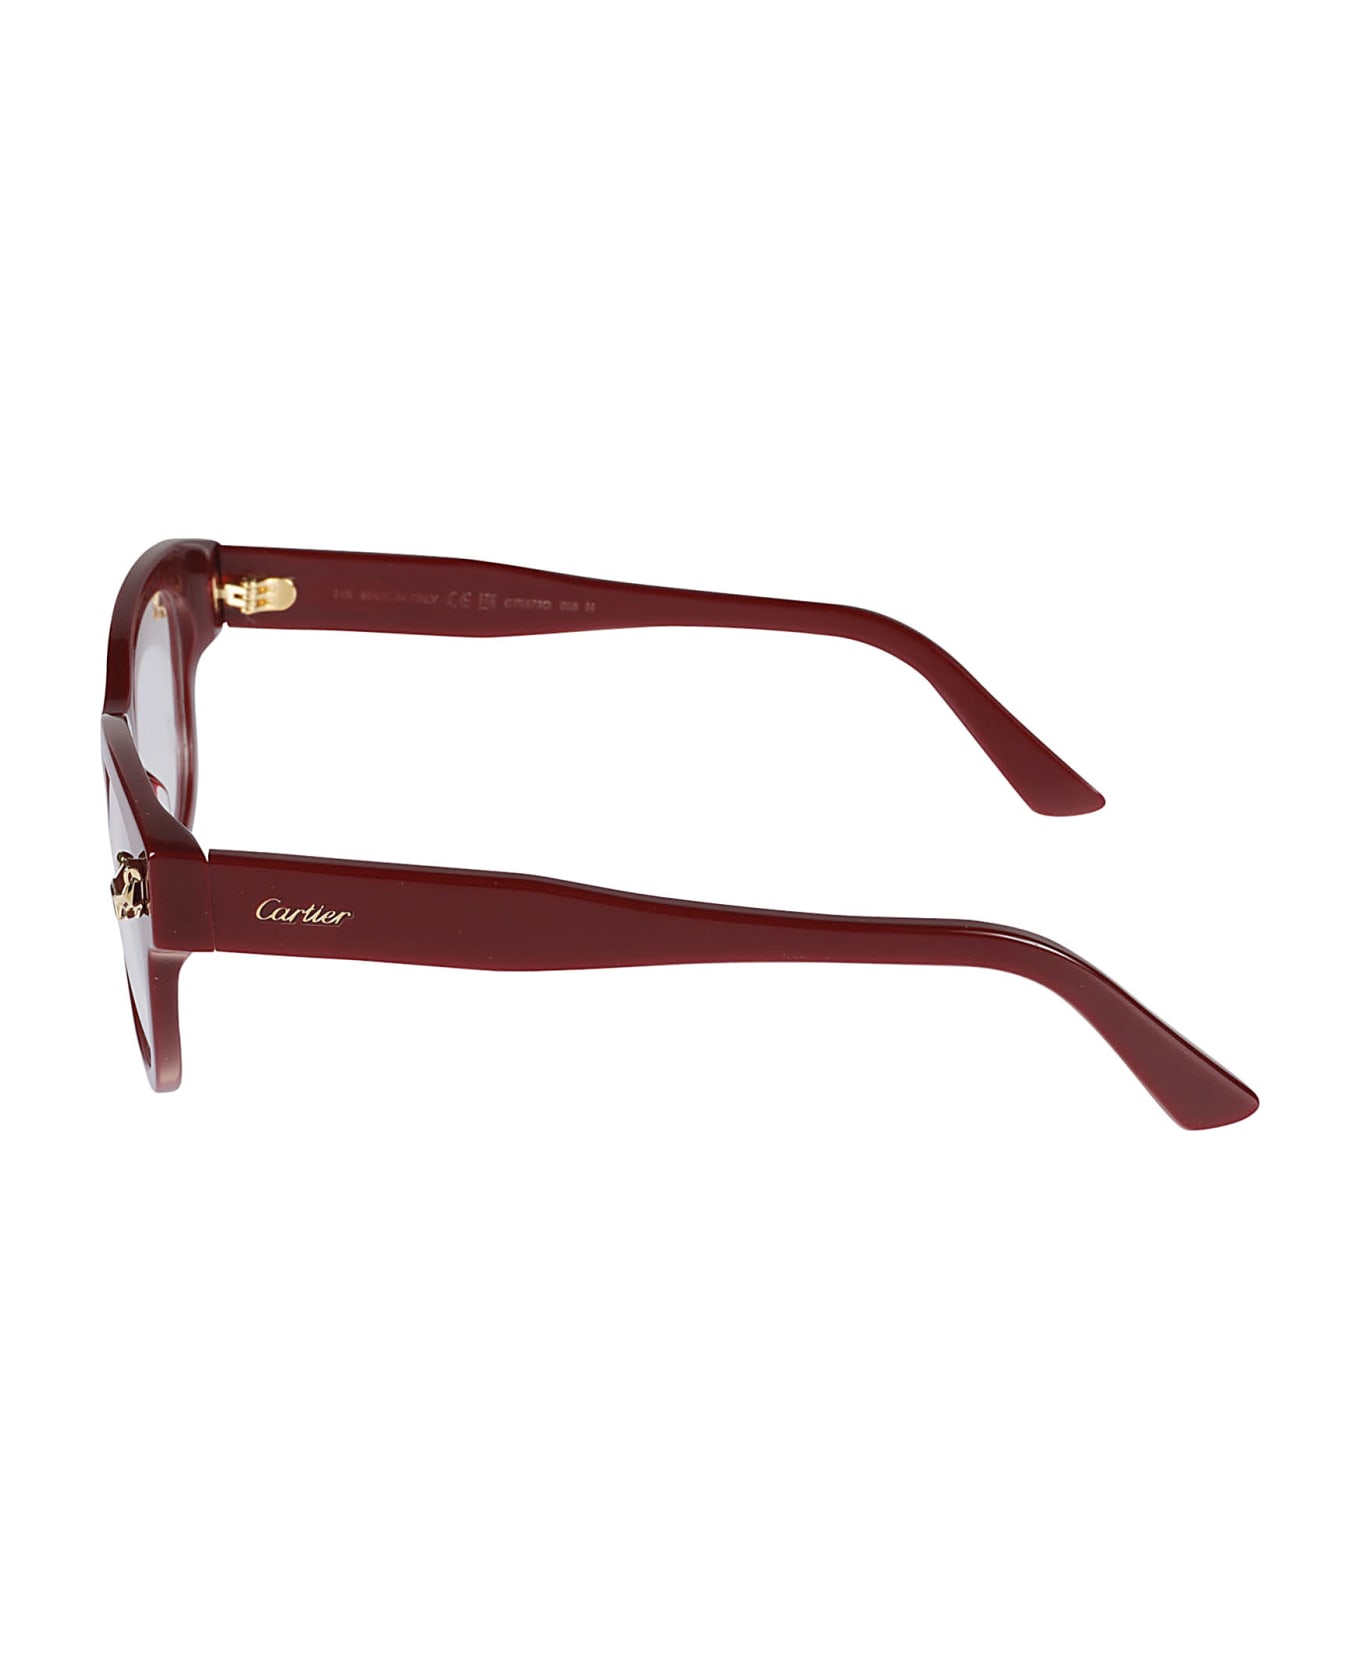 Cartier Eyewear Panthere Glasses - 003 burgundy burgundy tra アイウェア